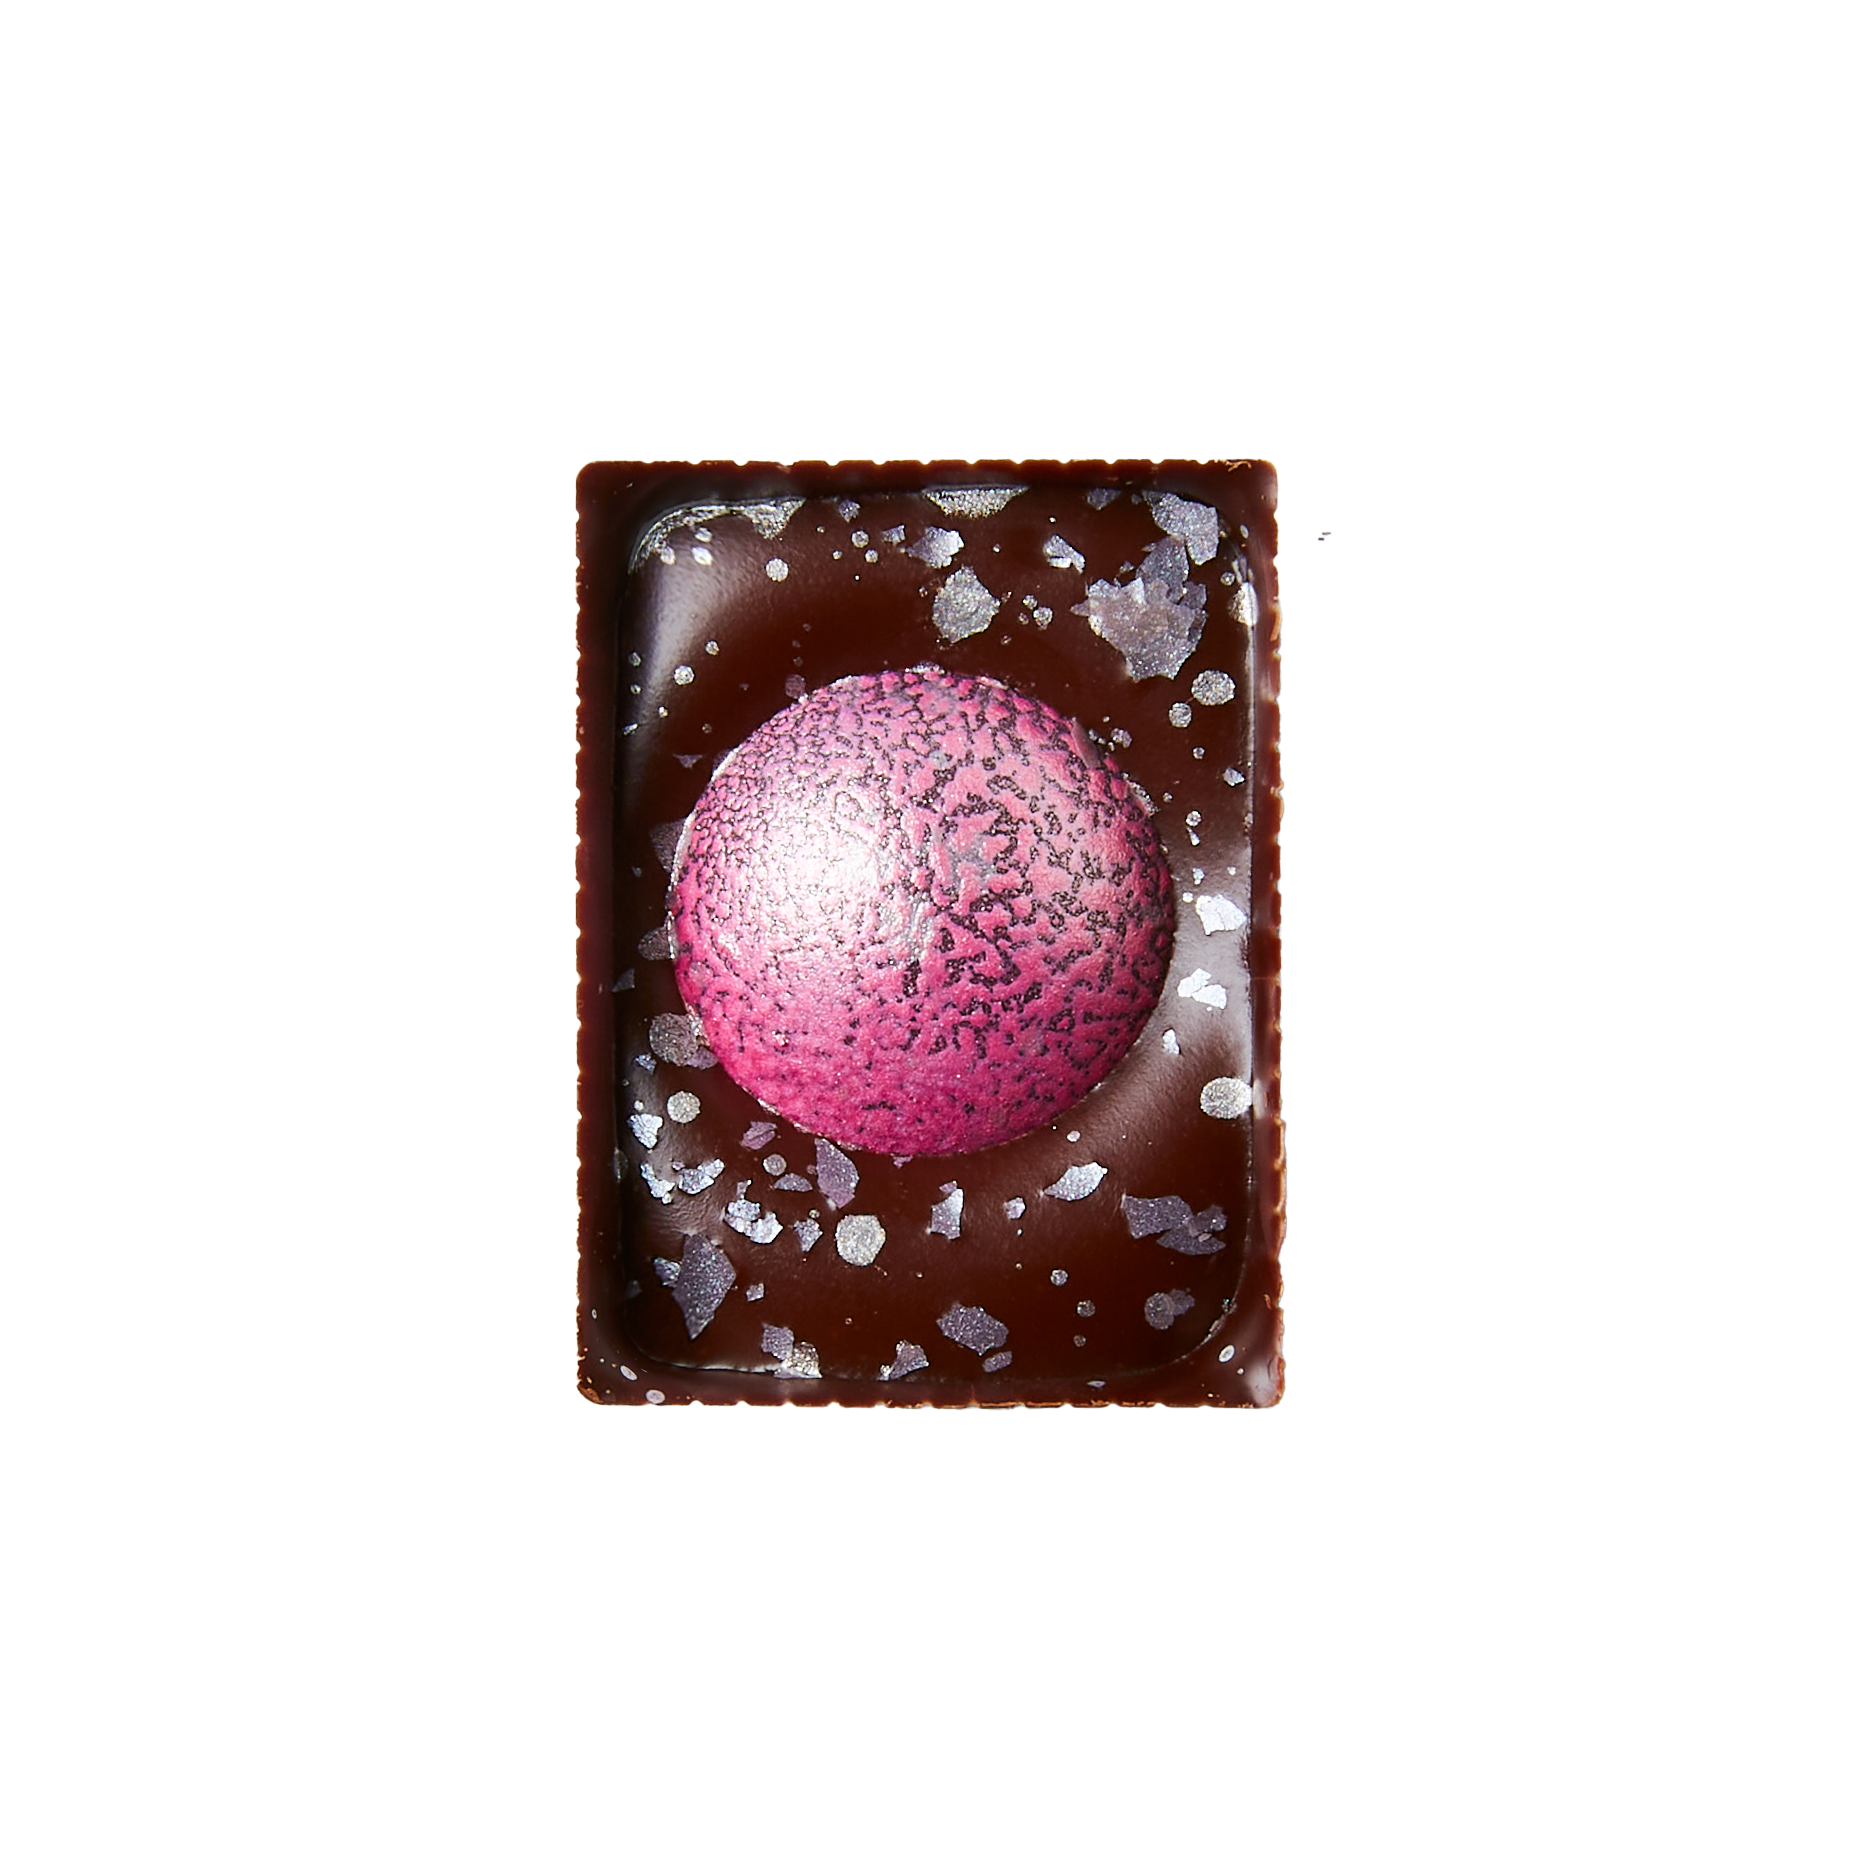 Bubs- Dark chocolate brut rosé caramel bon bon